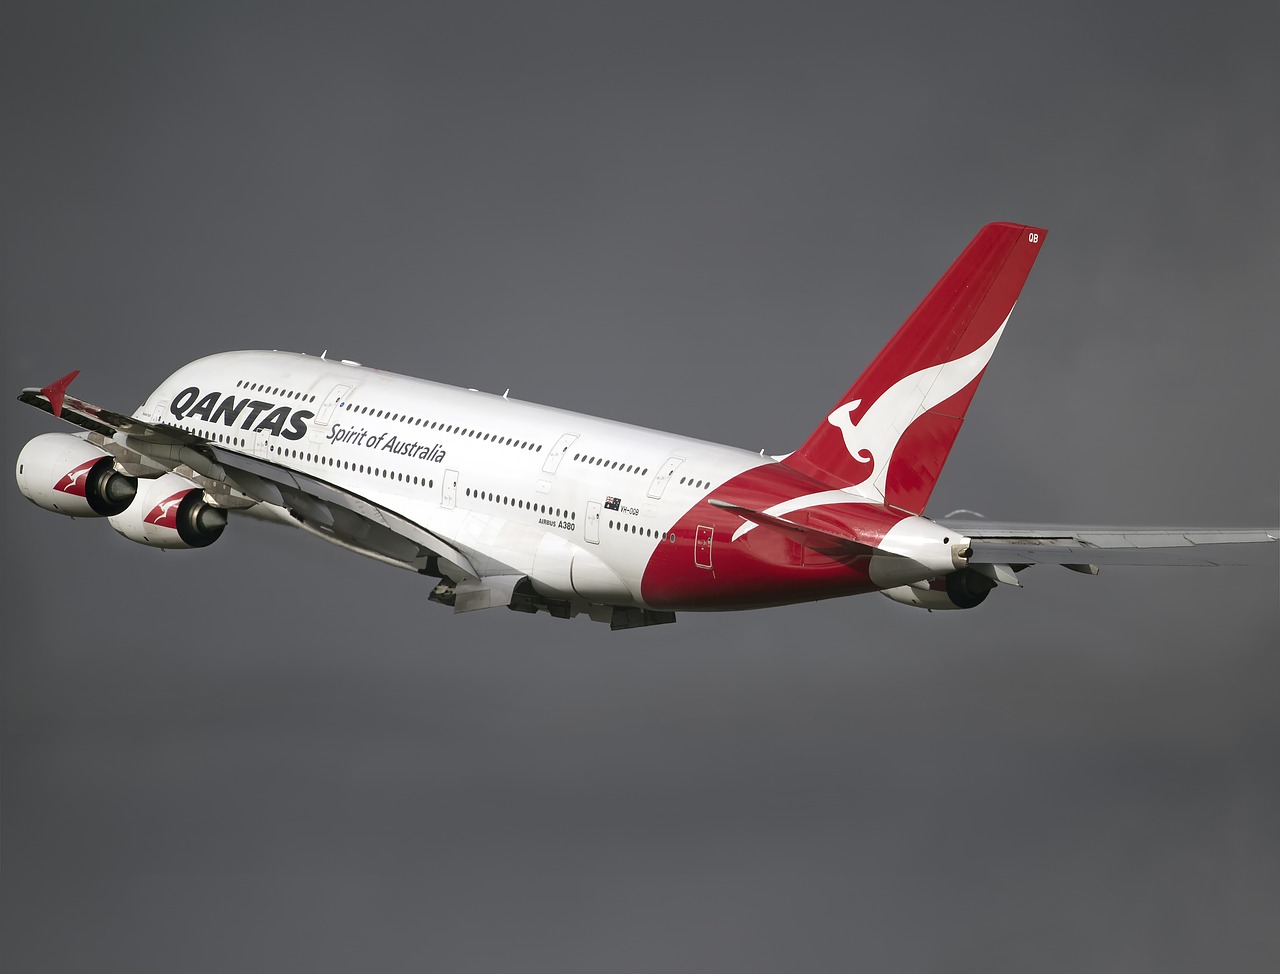 Australie: Qantas suspend ses vols internationaux jusqu'en octobre